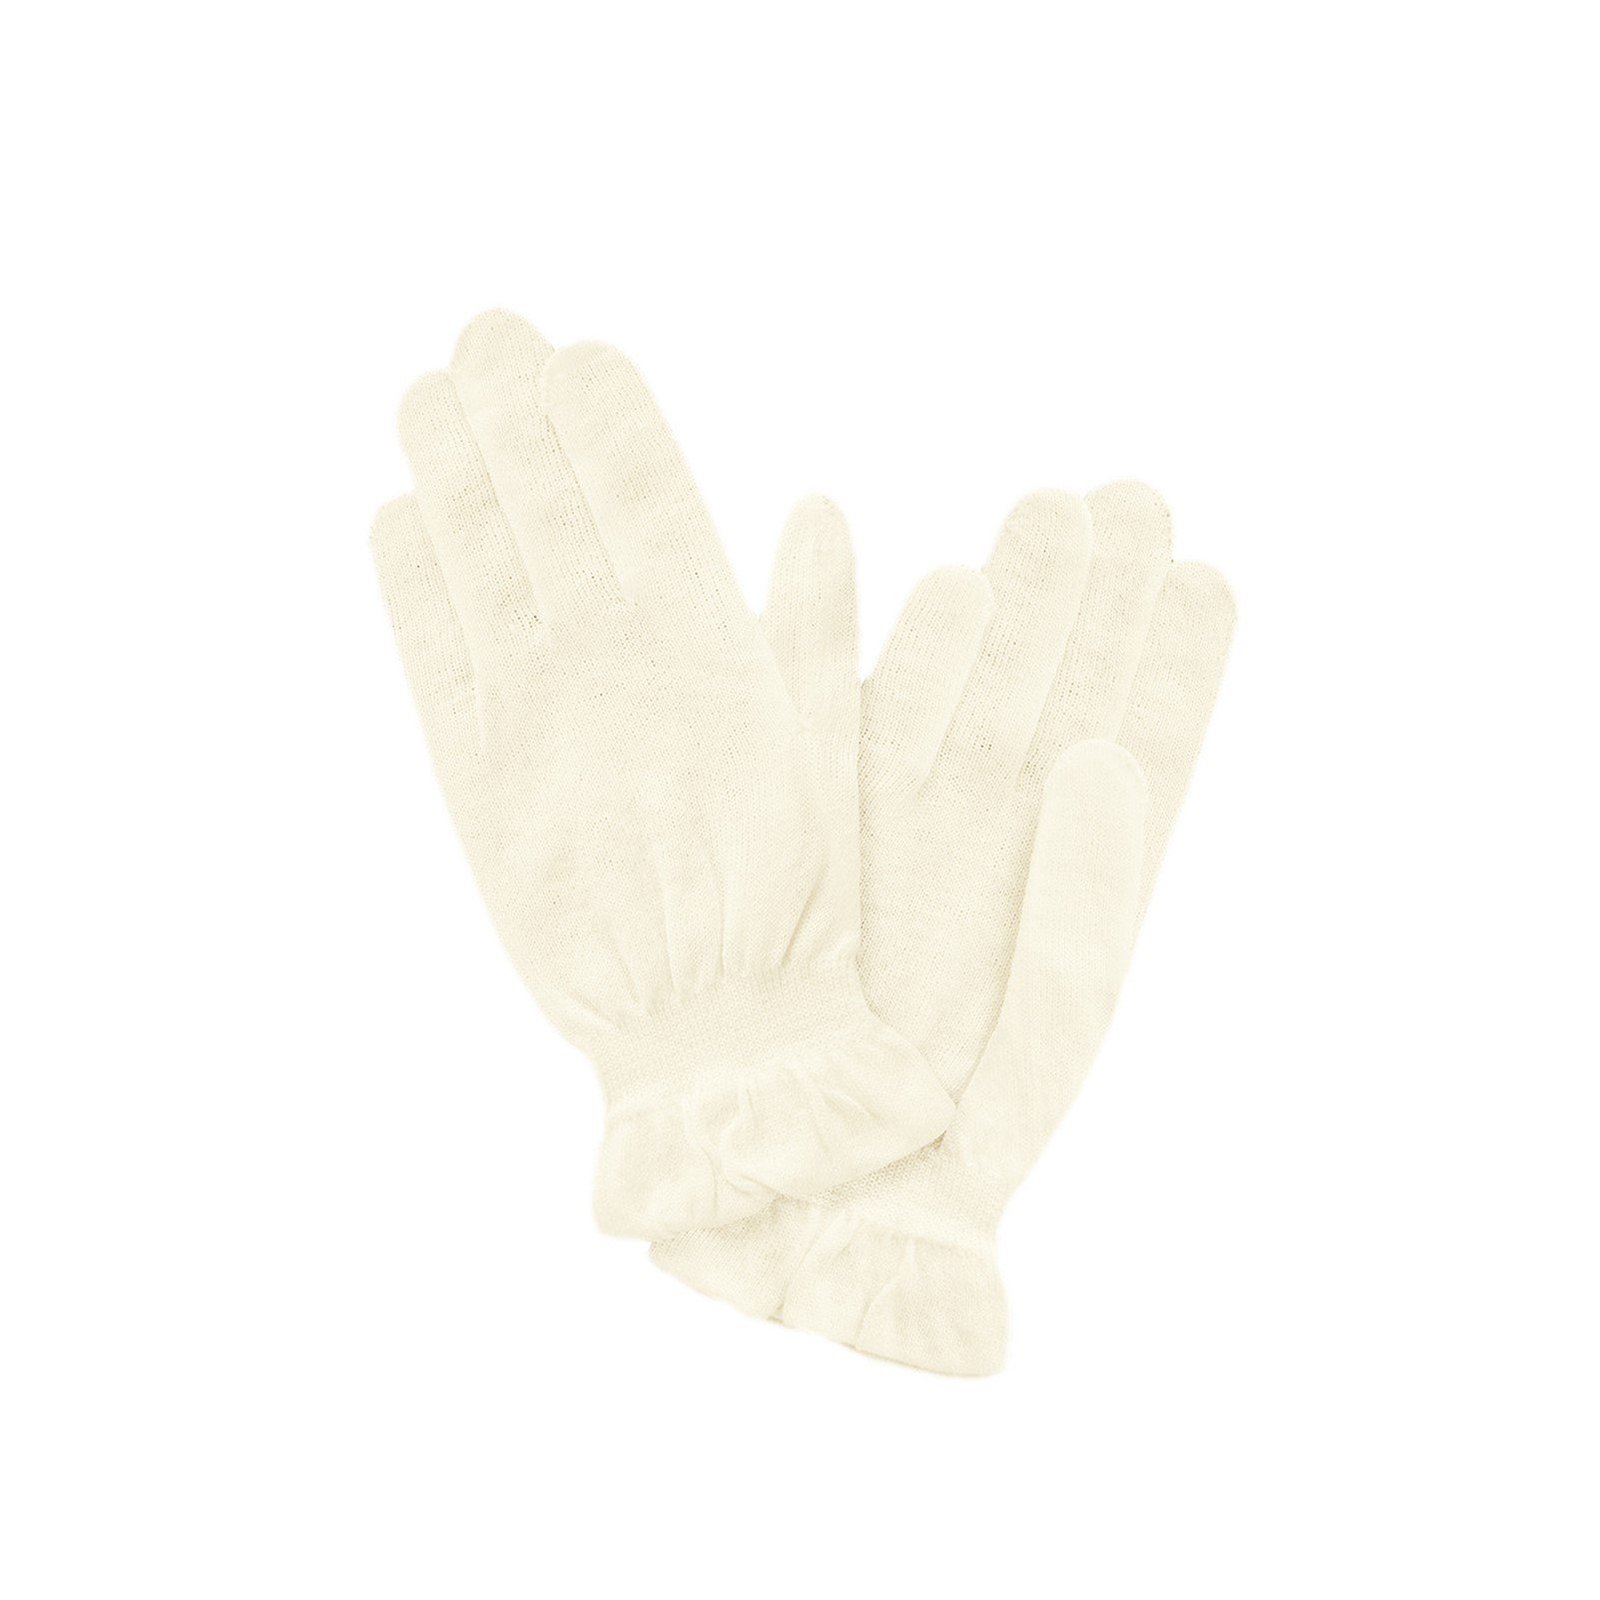 Sensai Cellular Performance Treatment Gloves x1 Pair